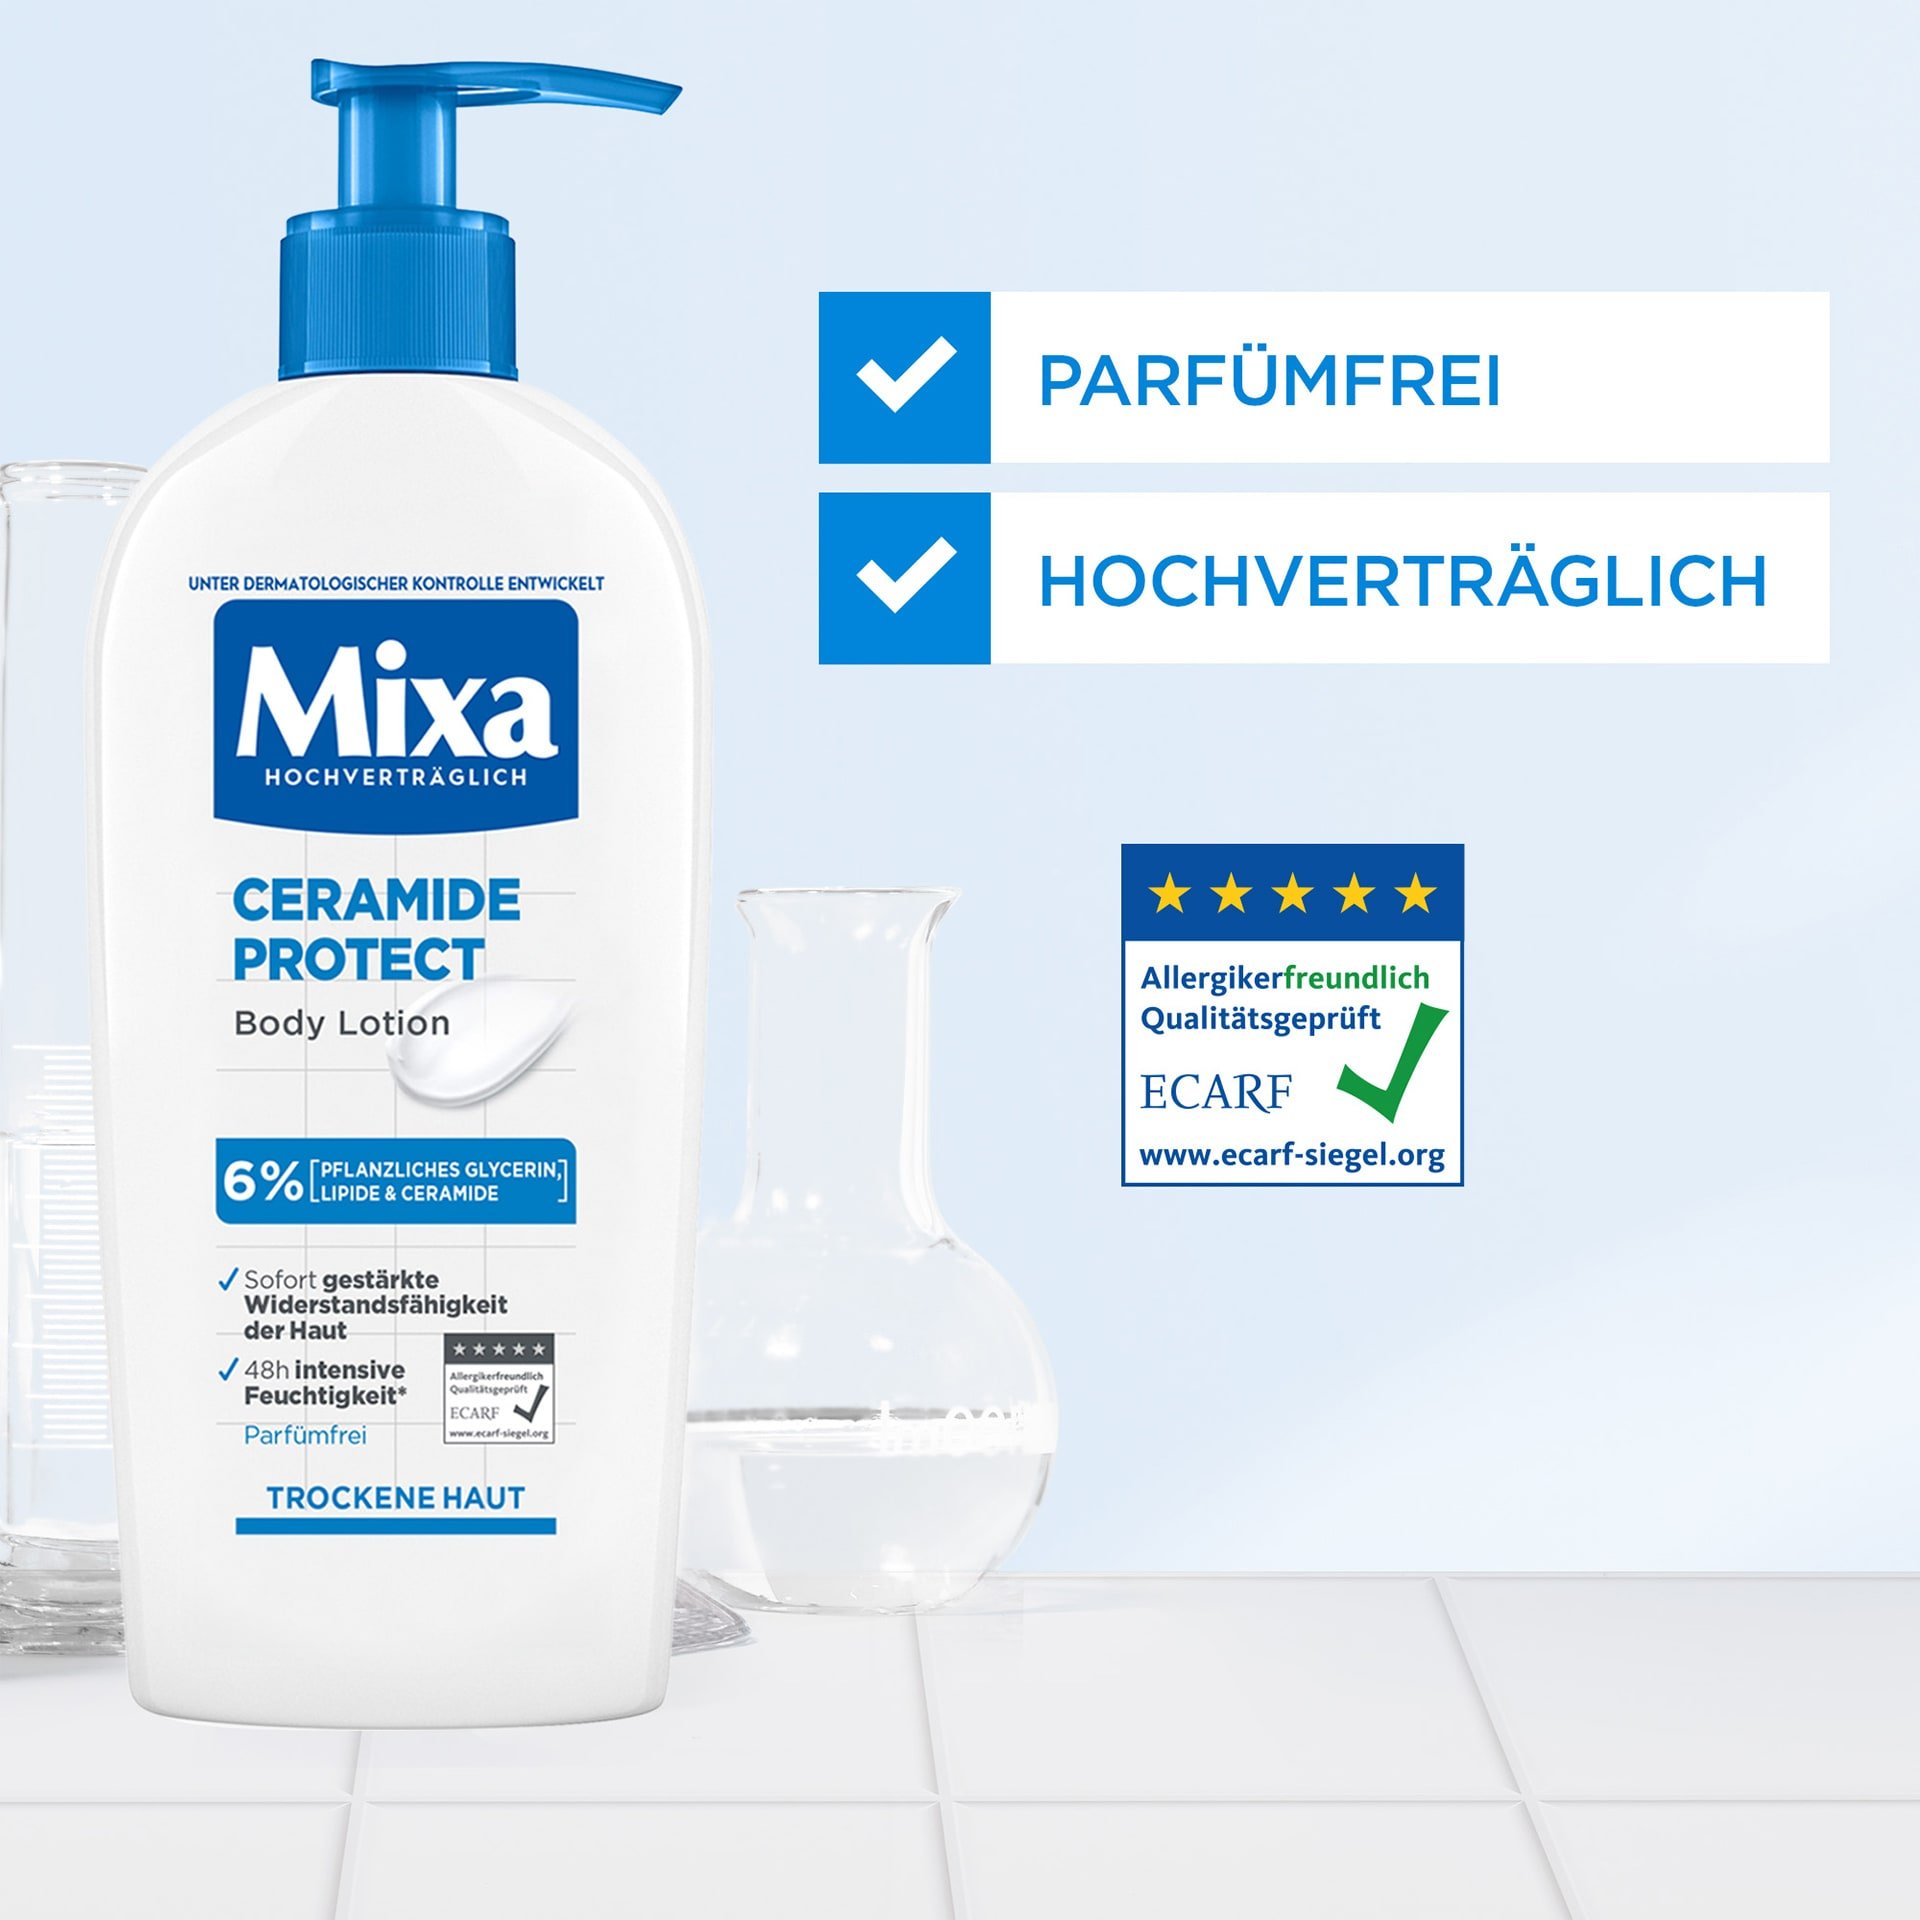 Mixa Ceramide Protect Moisturizing & Protective Cream - Moisturizing Body  Cream